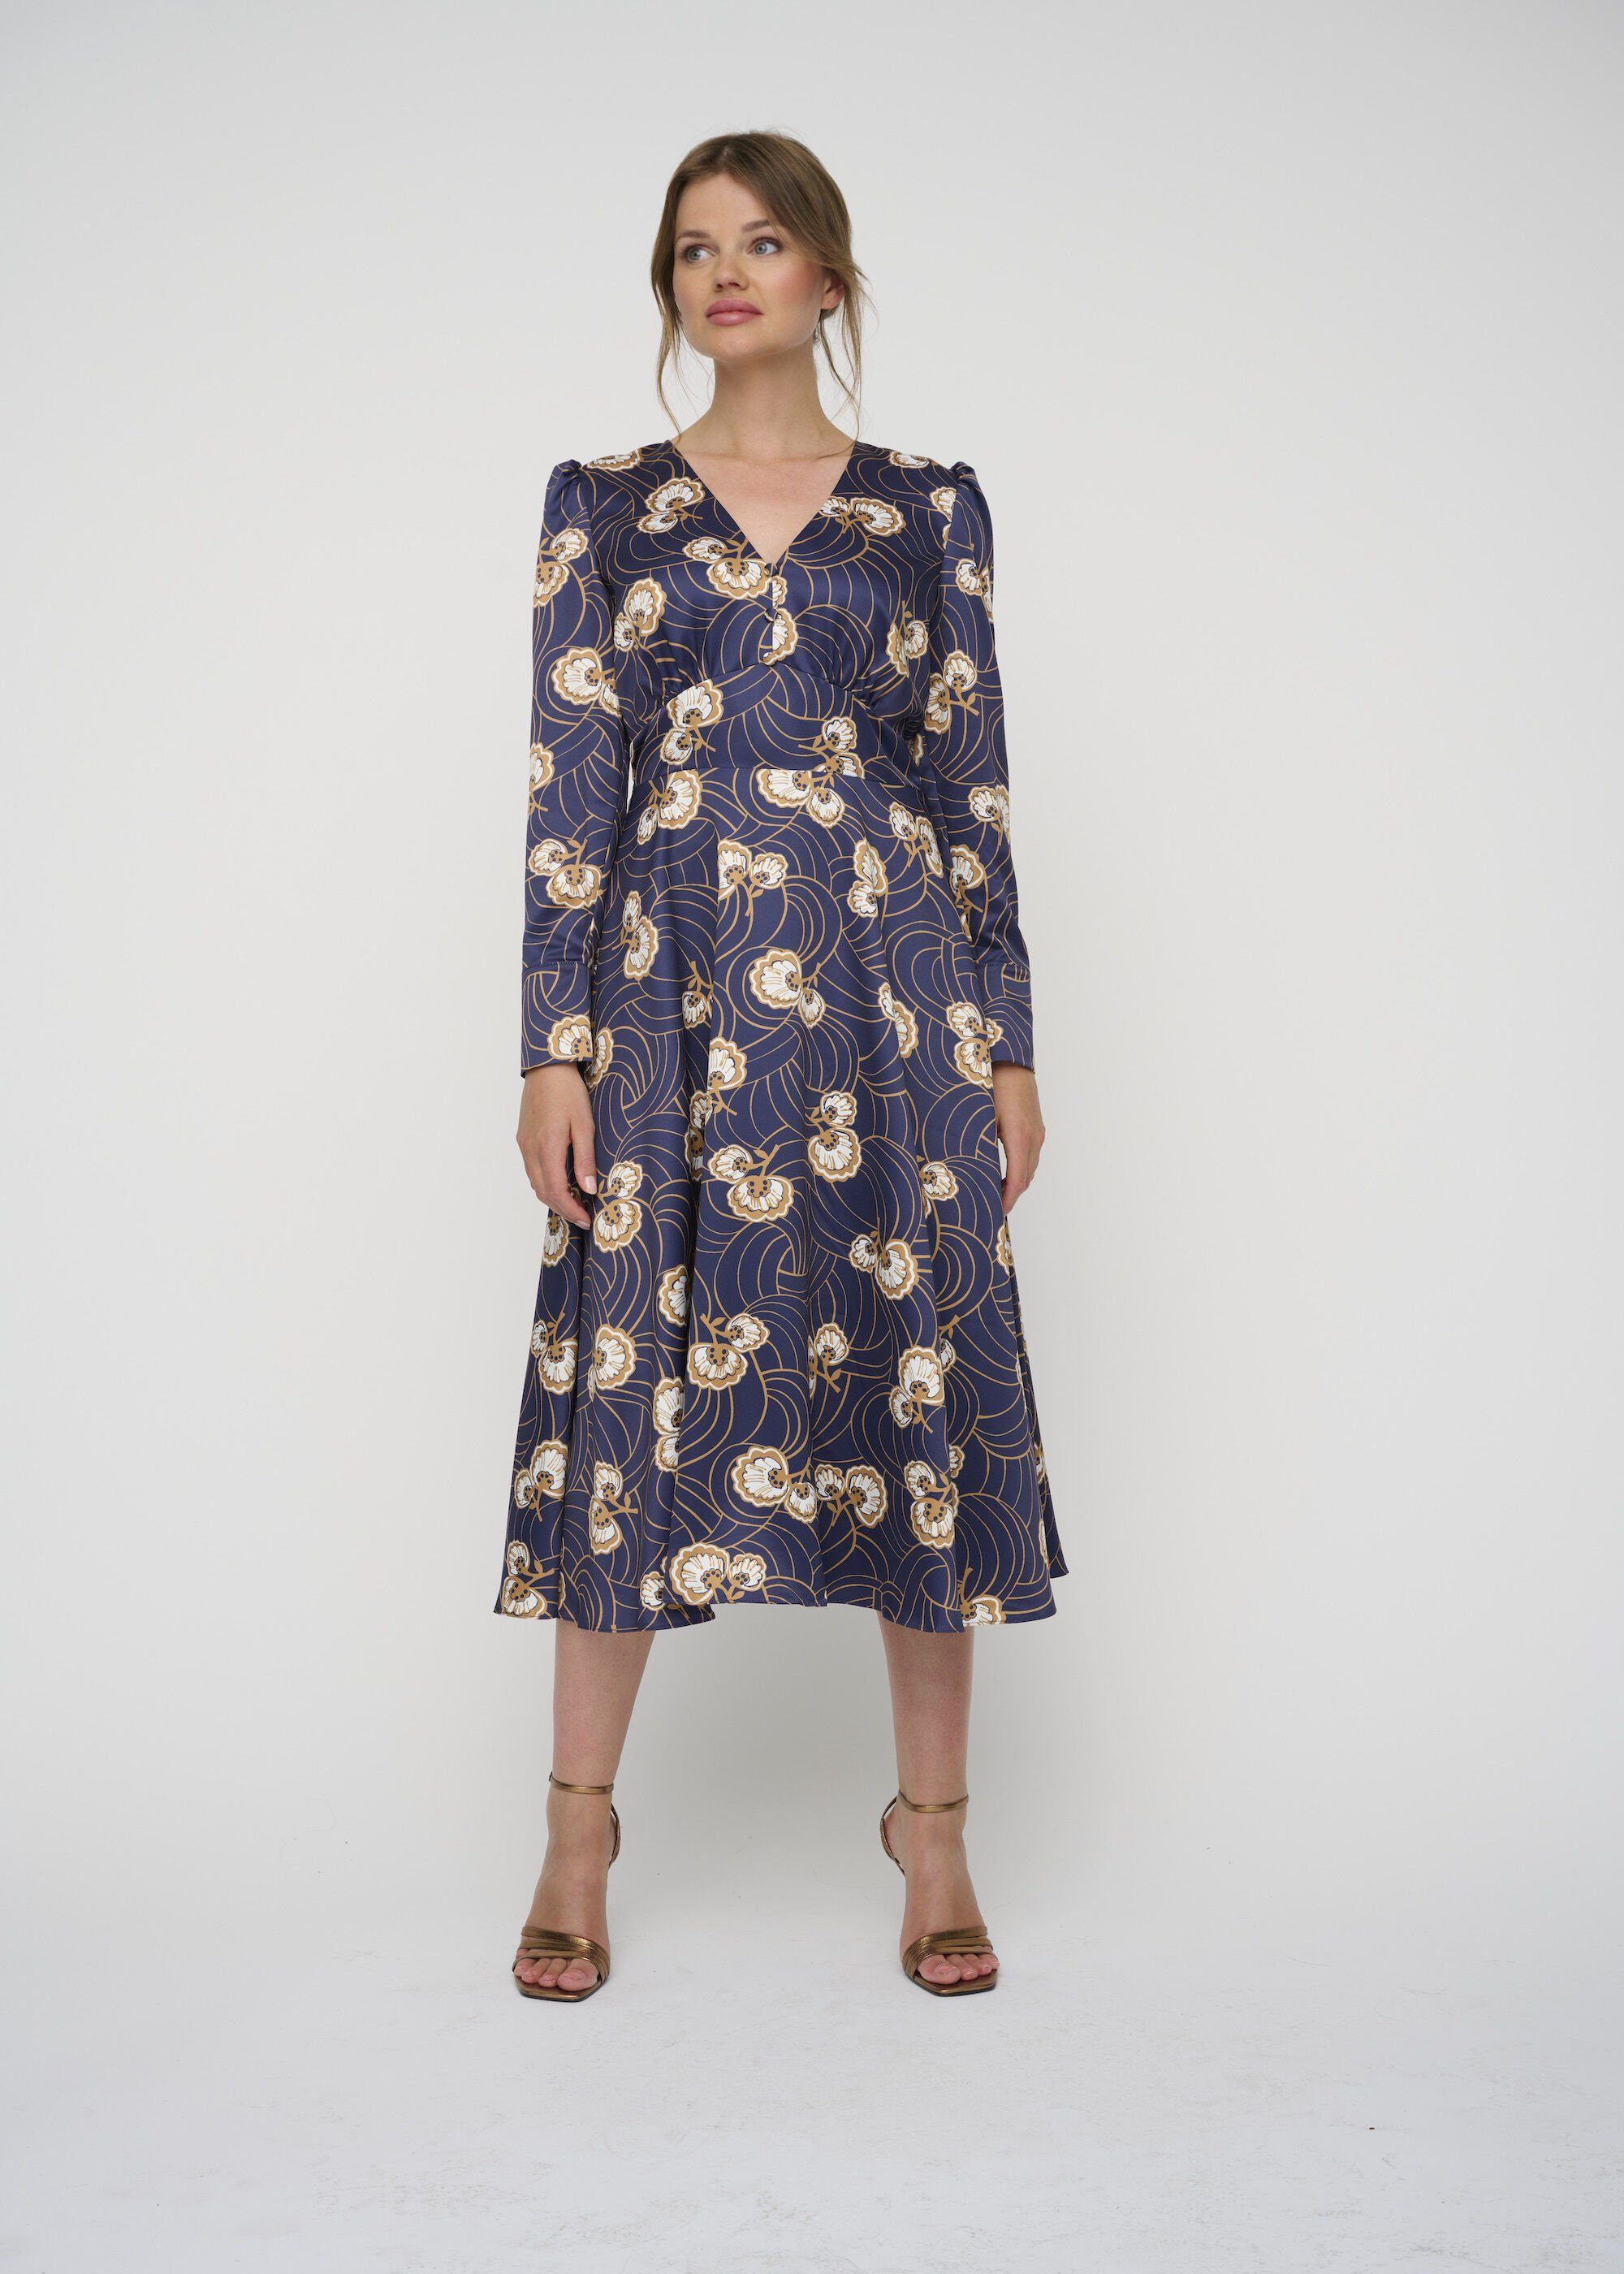 Kleo Abendkleid FIT & FLARE MIDI DRESS in glänzendem Satin mit Blumenprint MIDNIGHT NOUVEAU